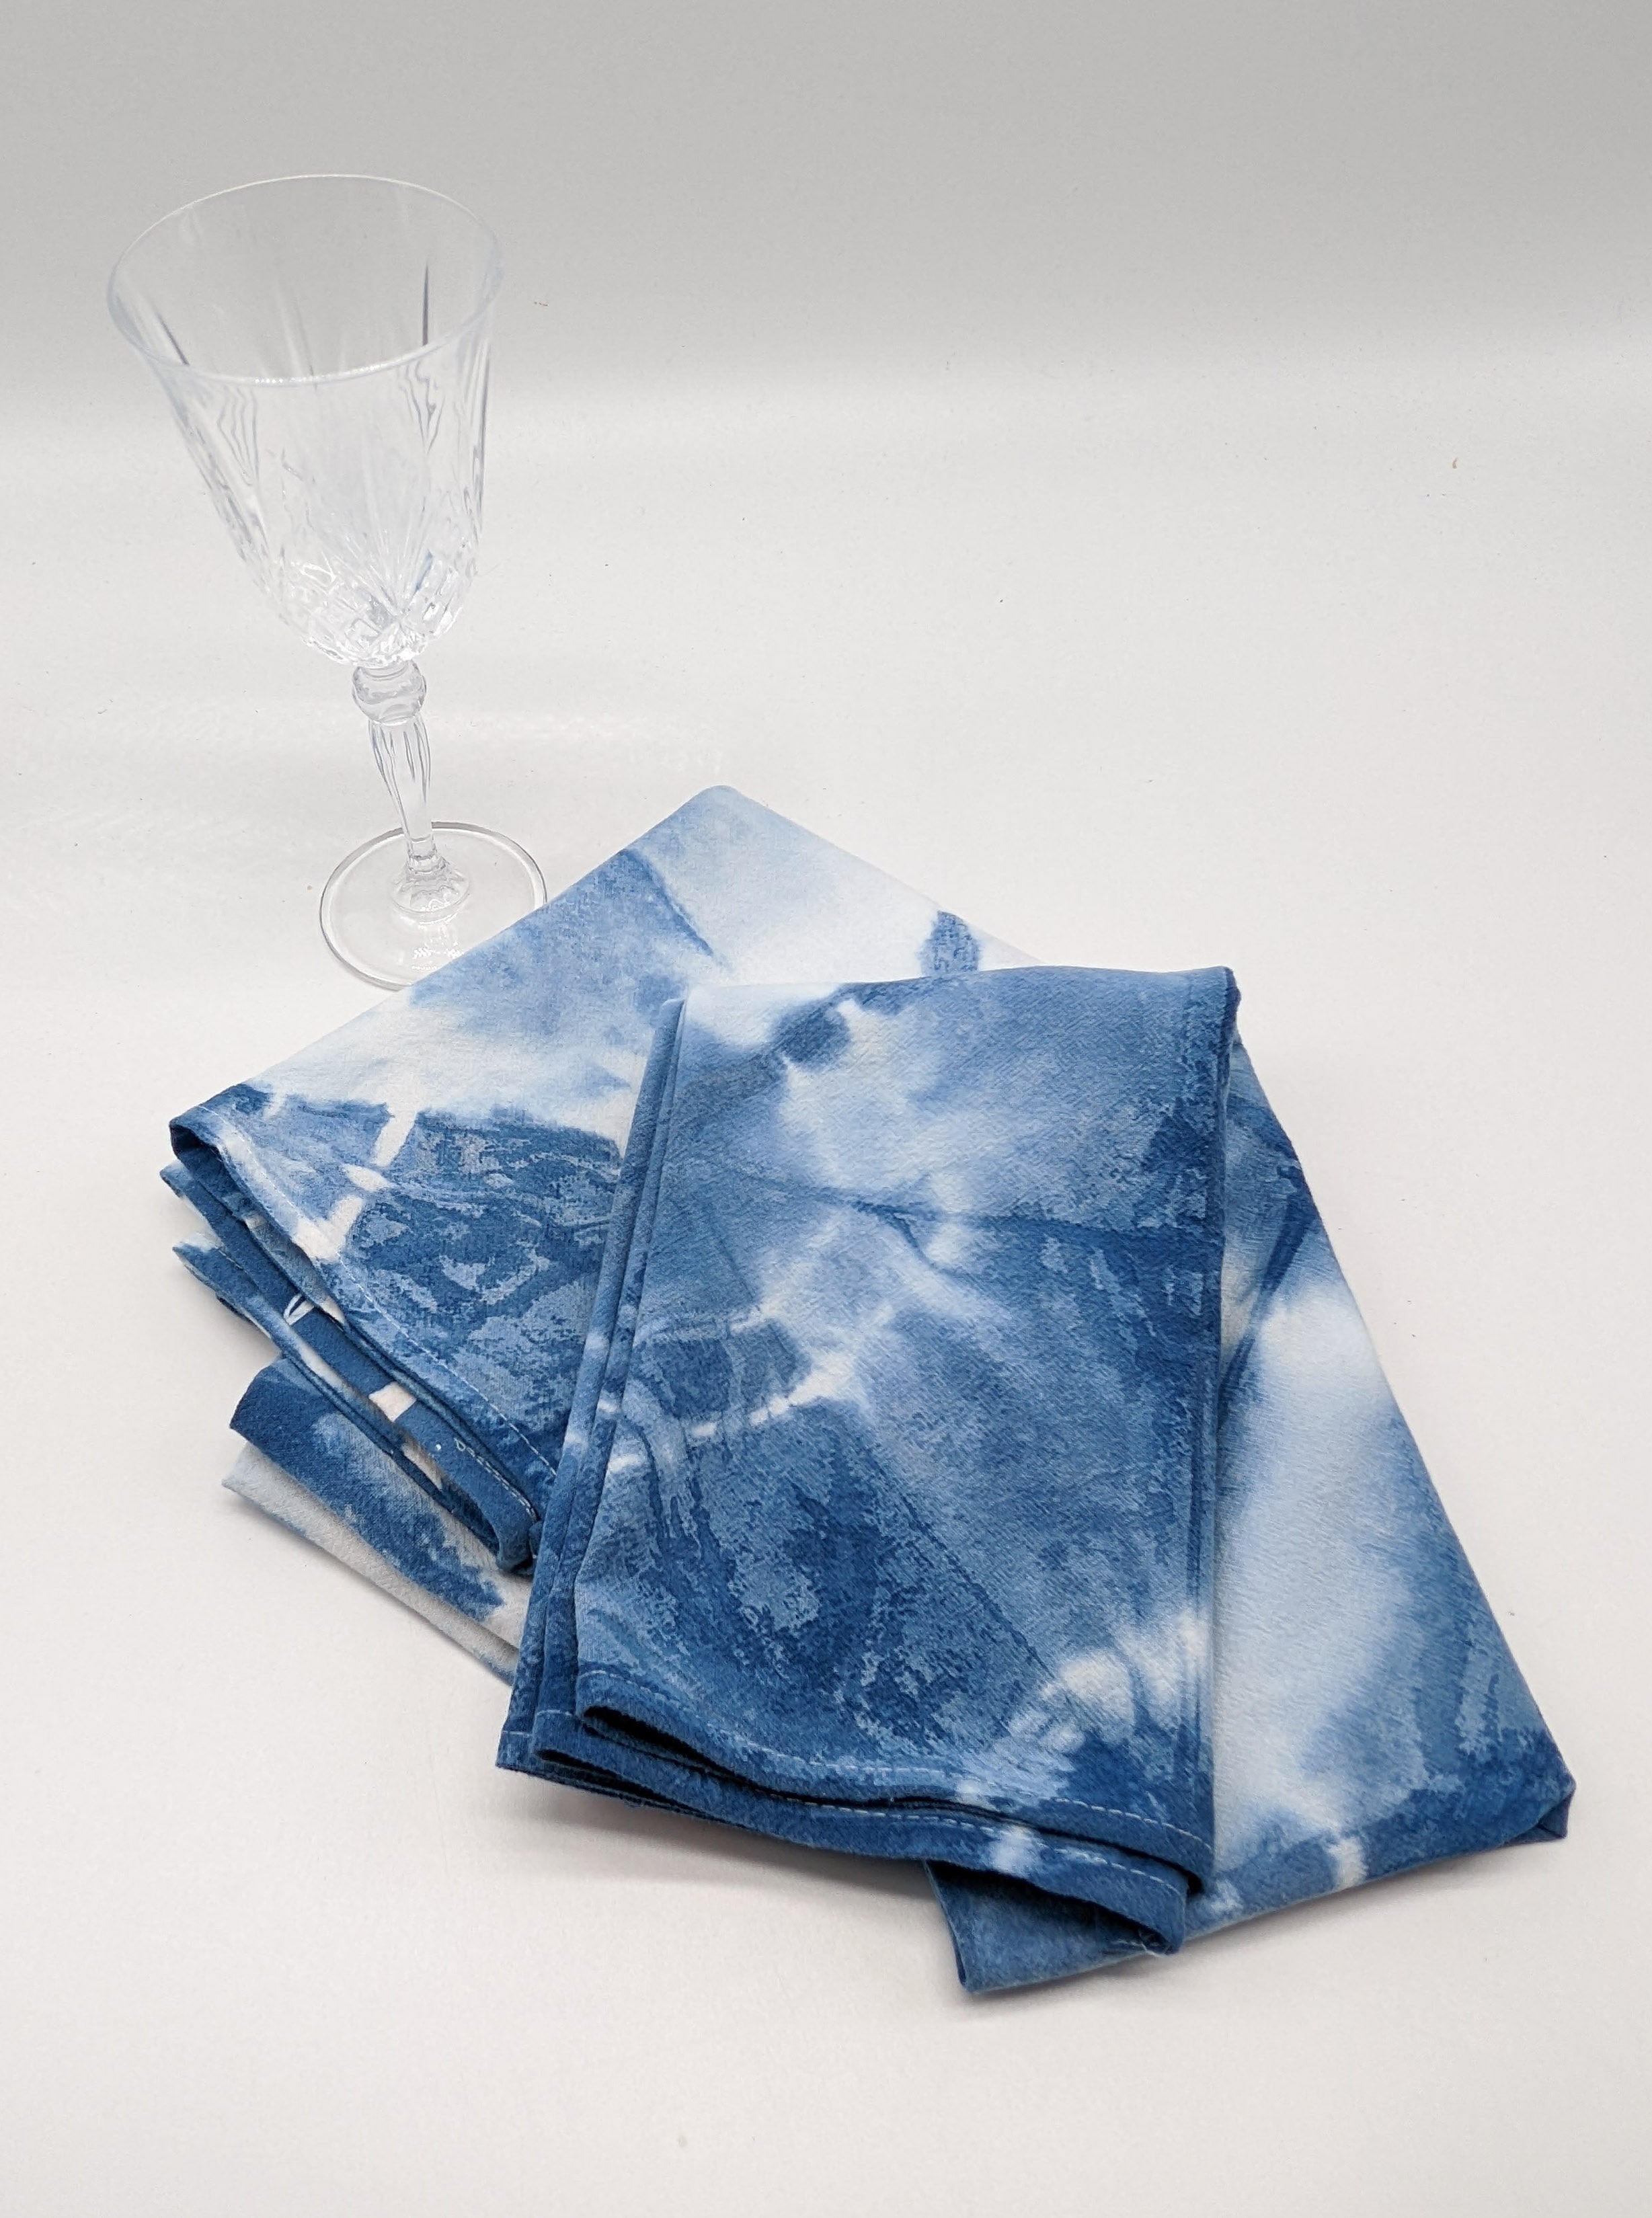 Indigo Shibori Cotton Sack Cloth Tea Towels - Set of 2 - 24" x 38" - The Caffeinated Raven